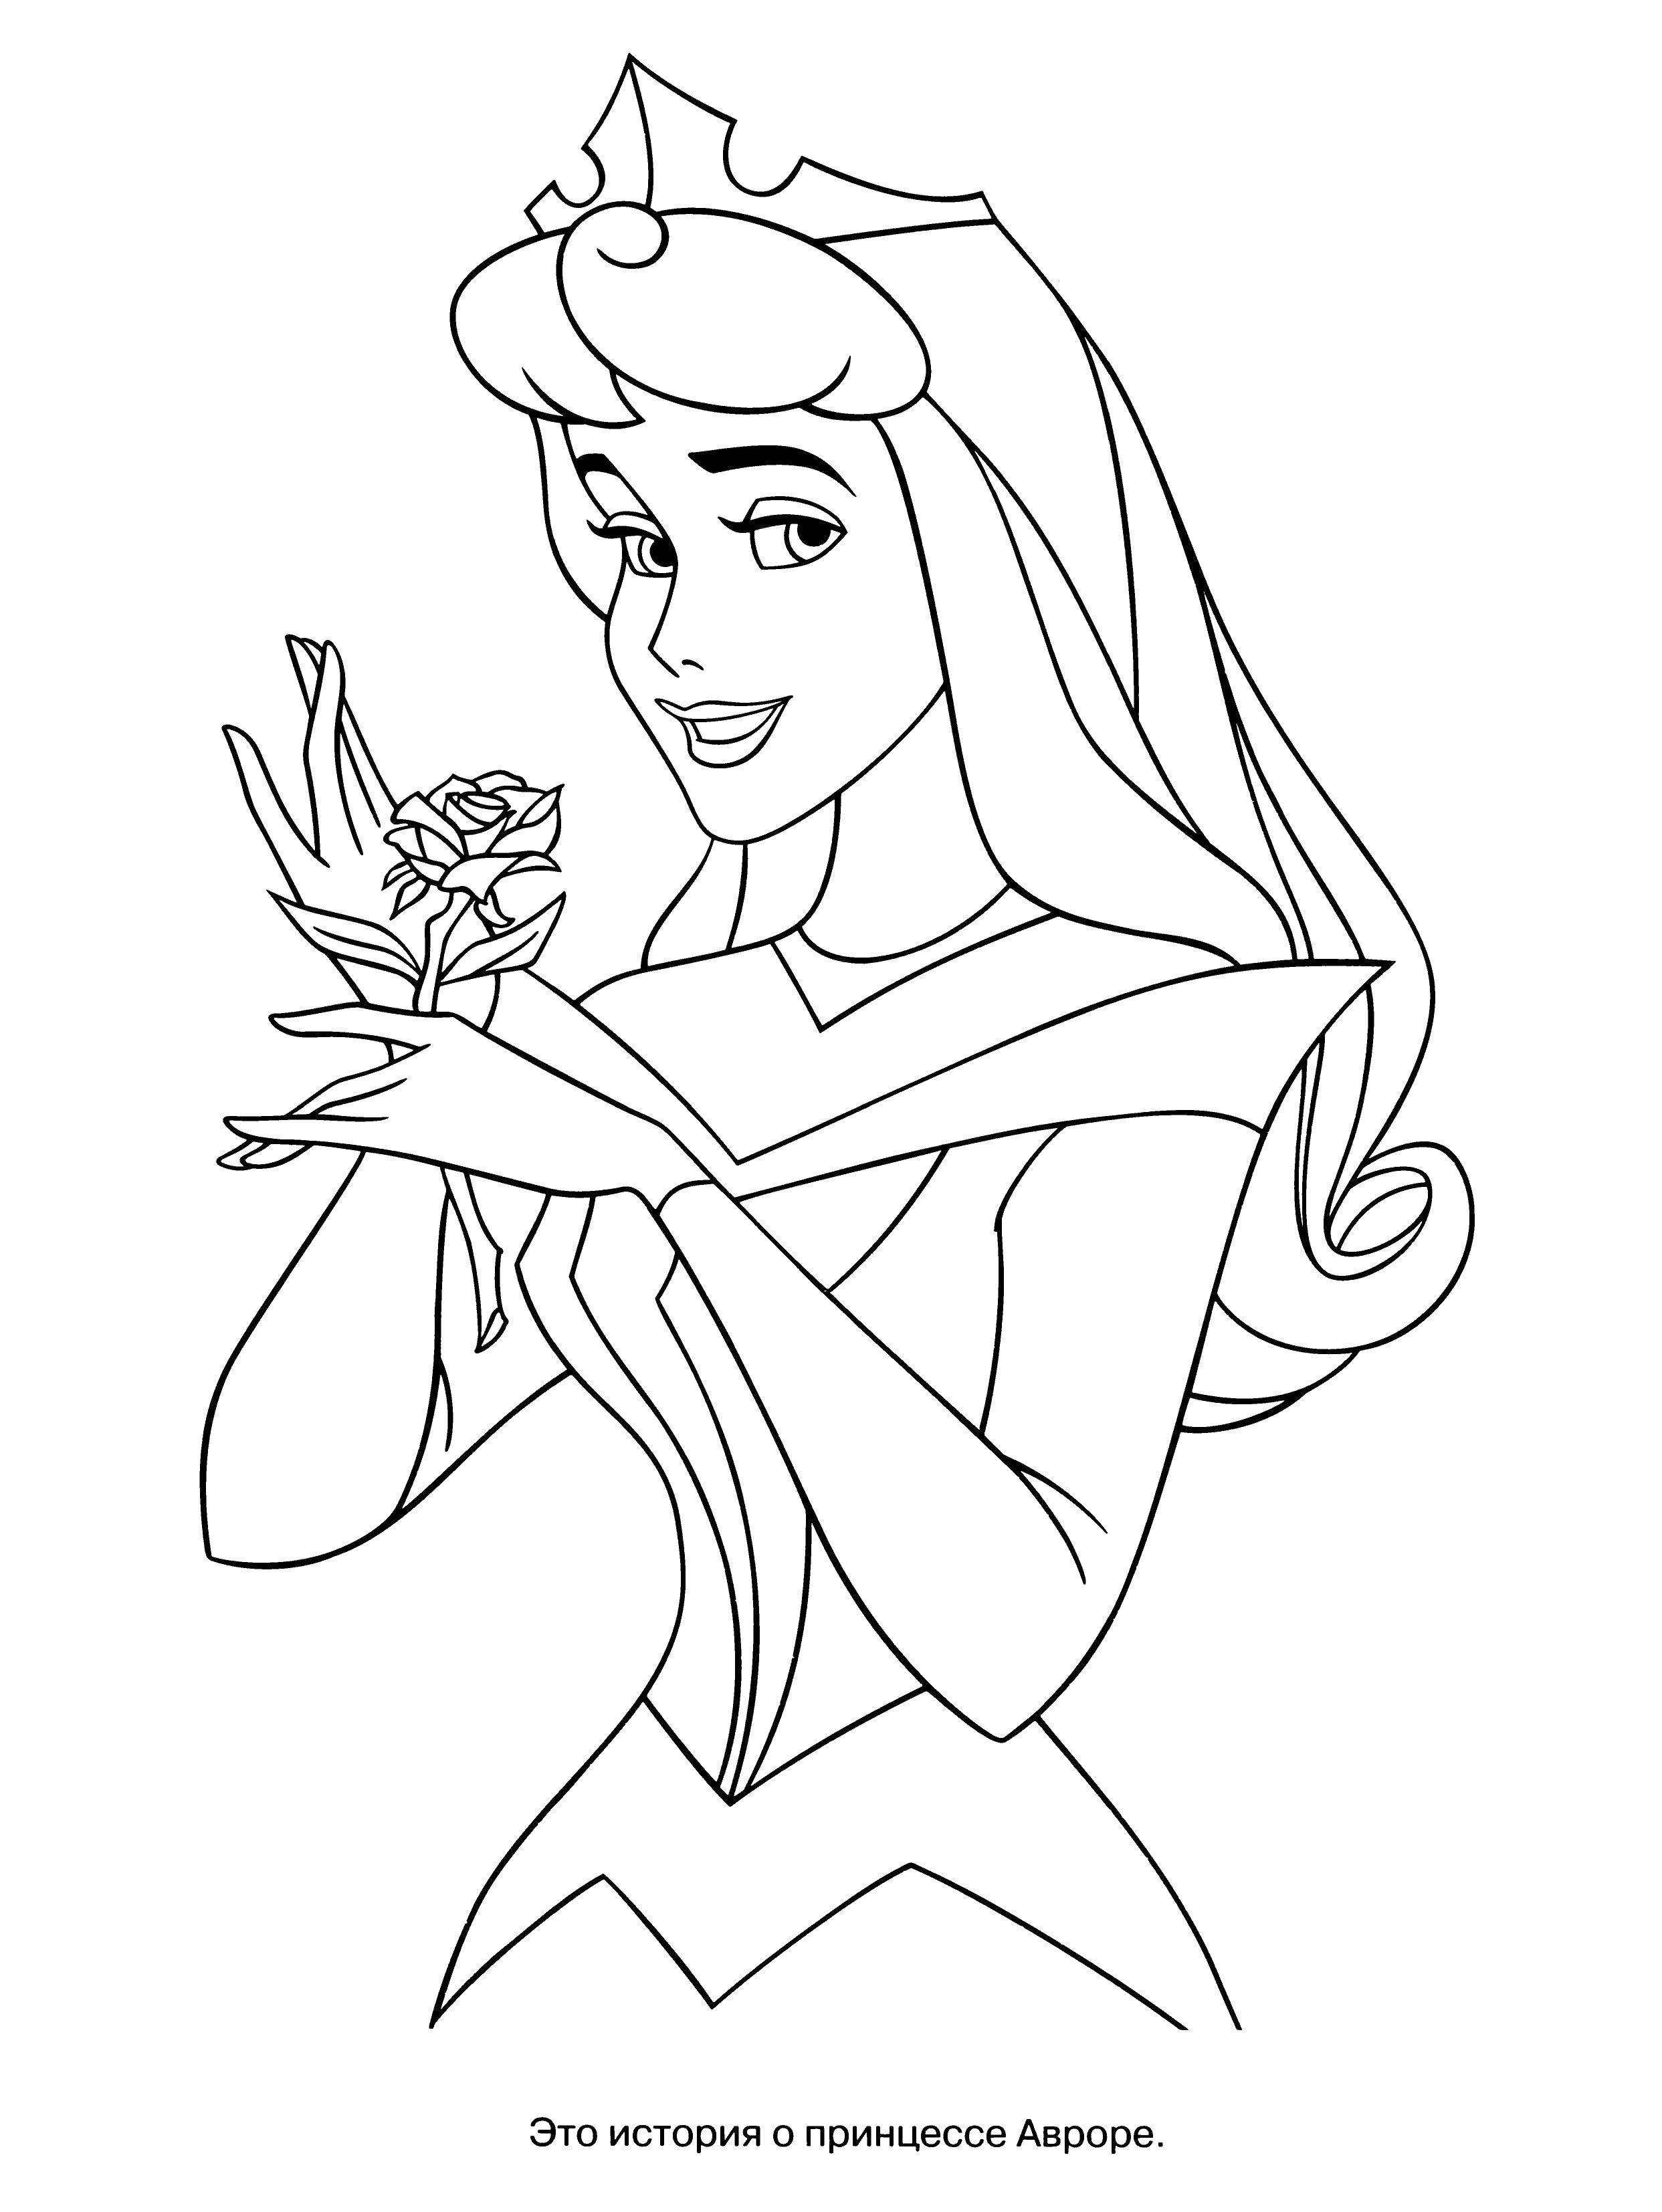 Coloring Aurora rose. Category cartoons. Tags:  Princess , Aurora, rose.